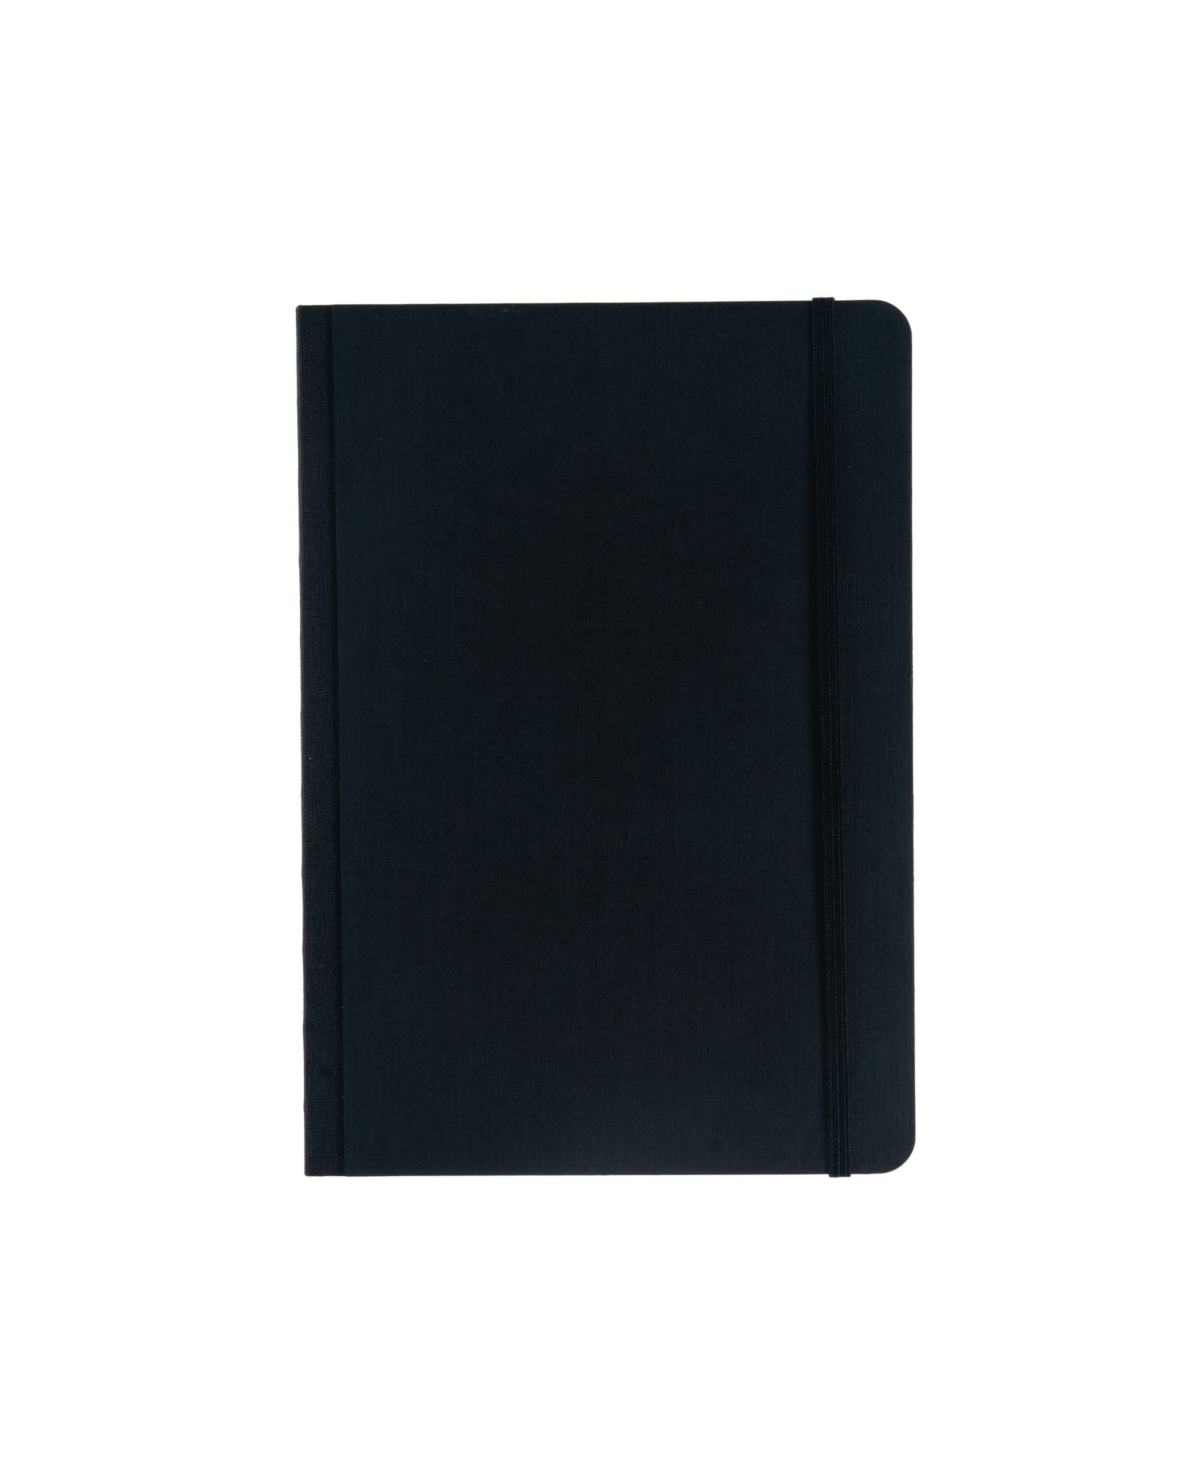 Ecoqua Plus Fabric Bound Lined A5 Notebook, 5.8" x 8.3" - Black